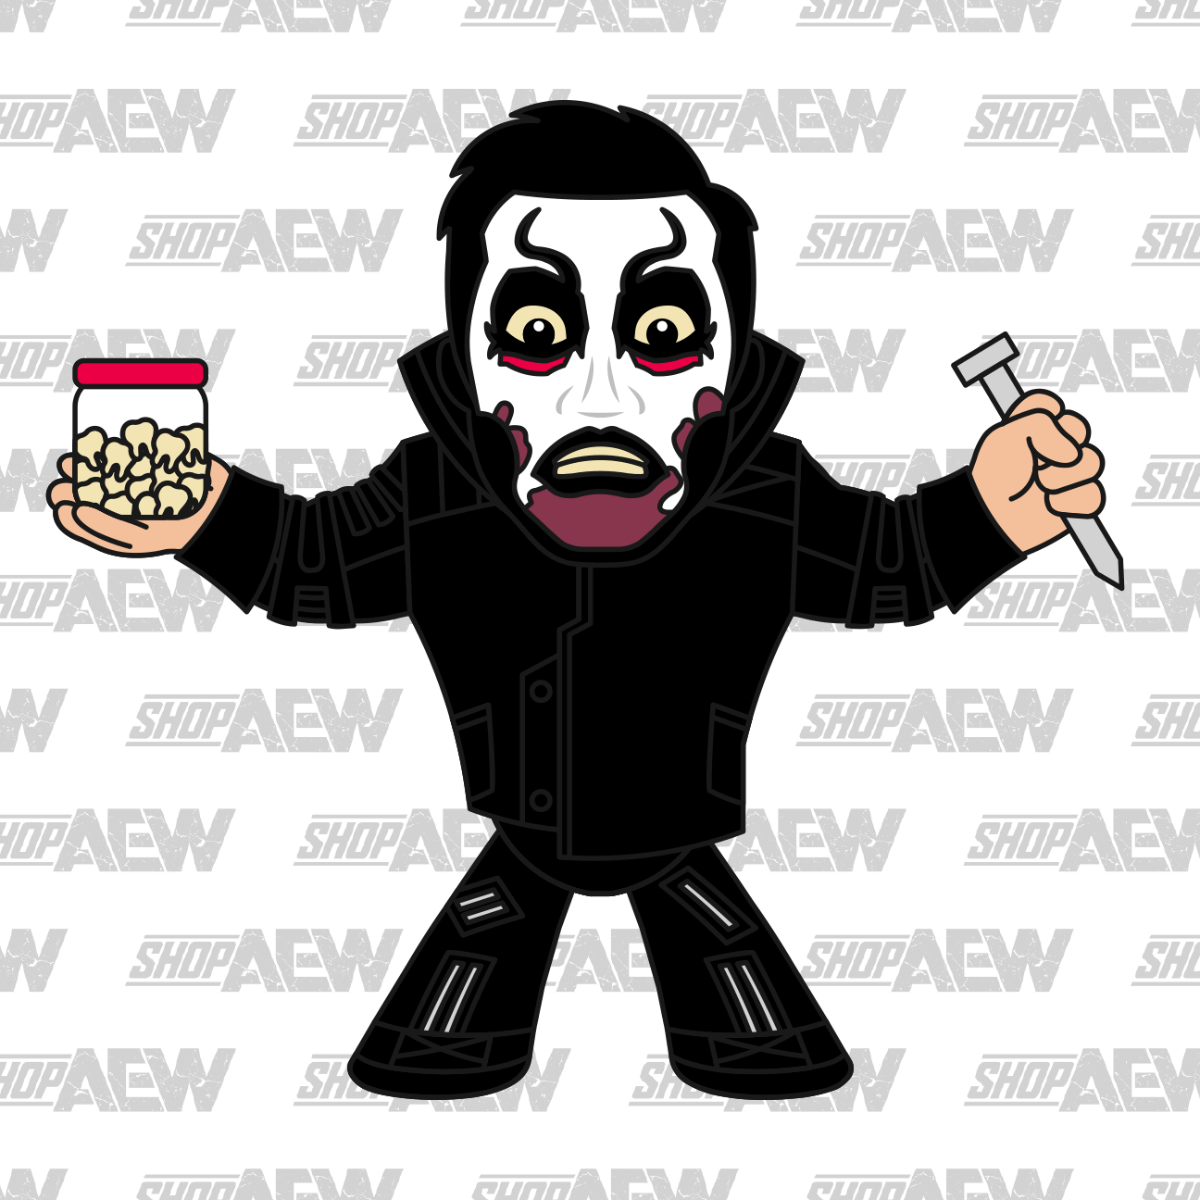 AEW danhausen very evil micro brawler new in card – St. John's